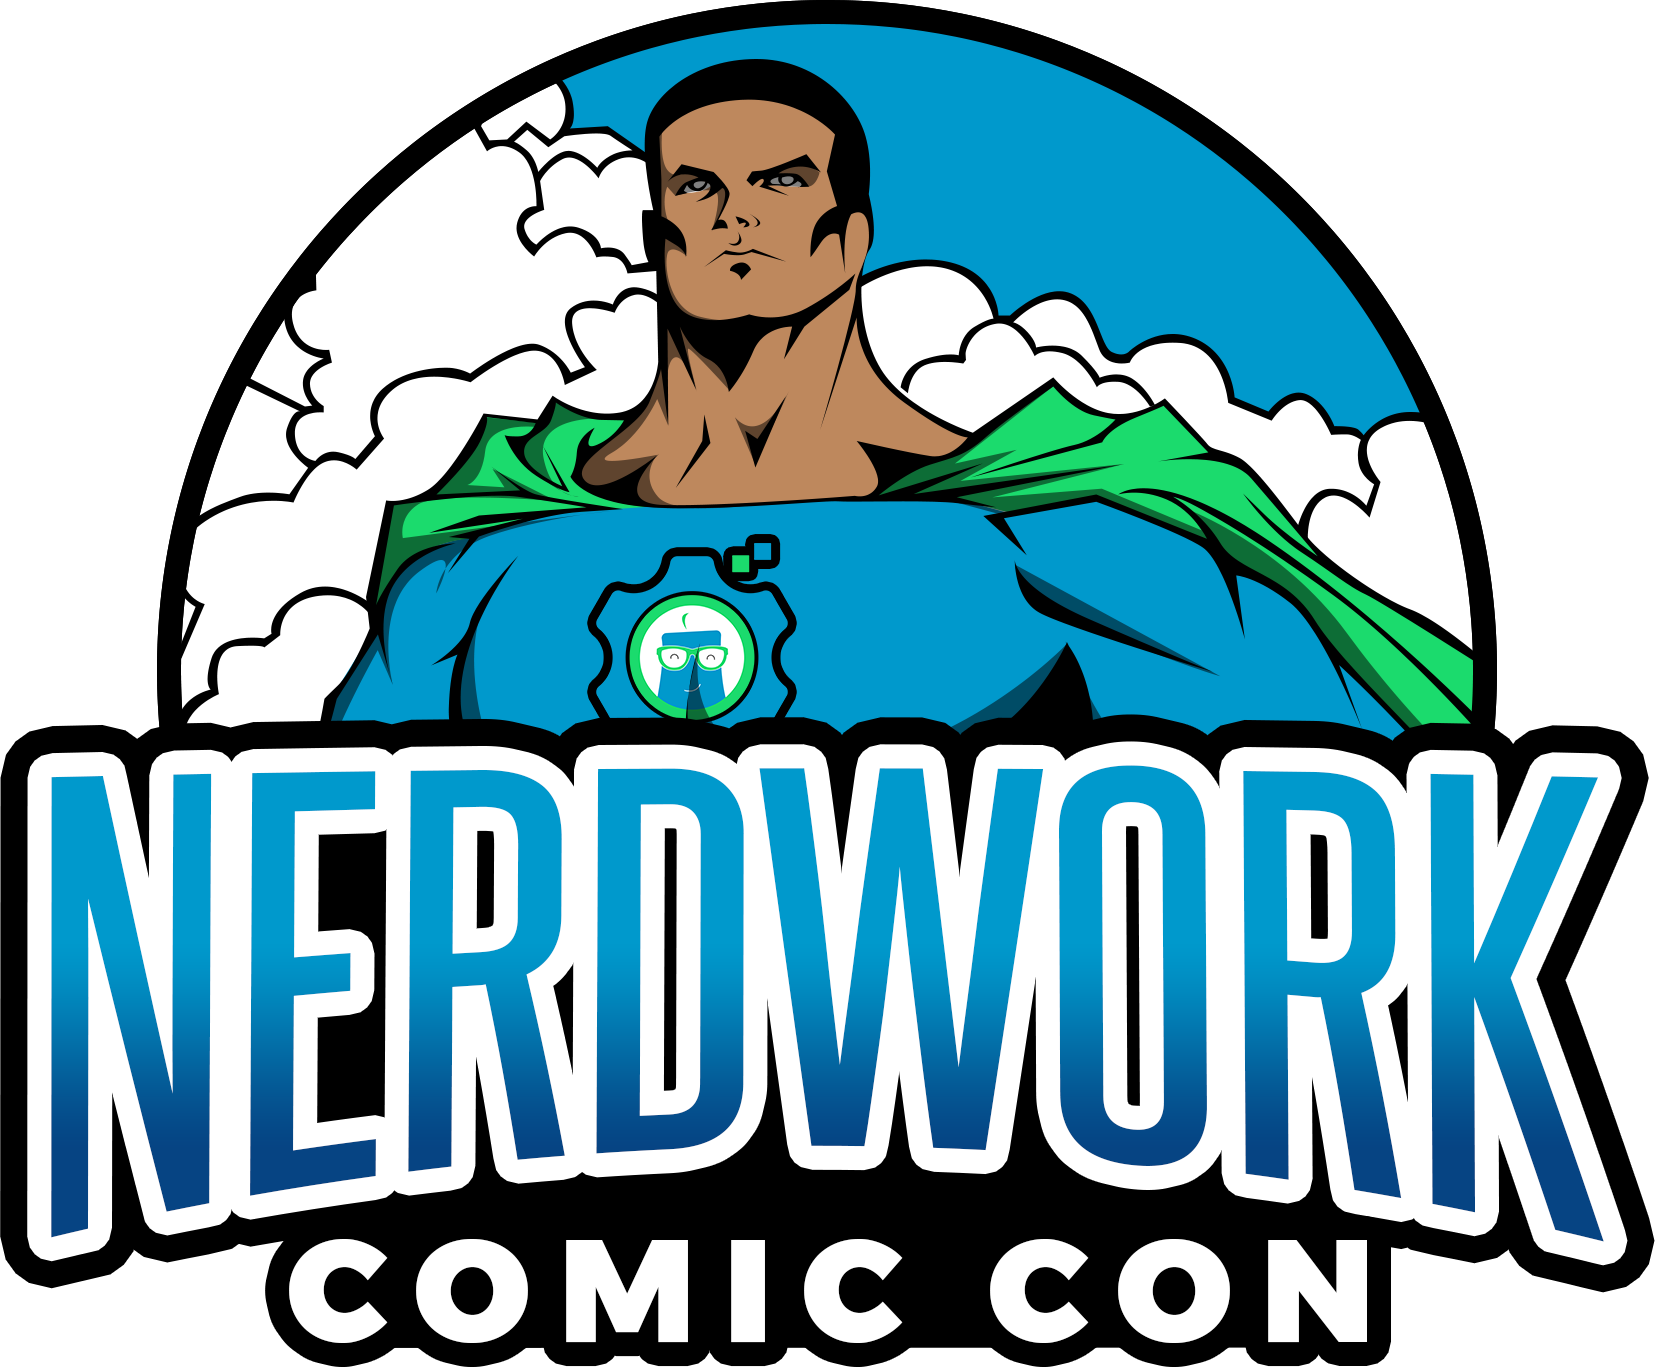 Nerdwork Comic Con logo